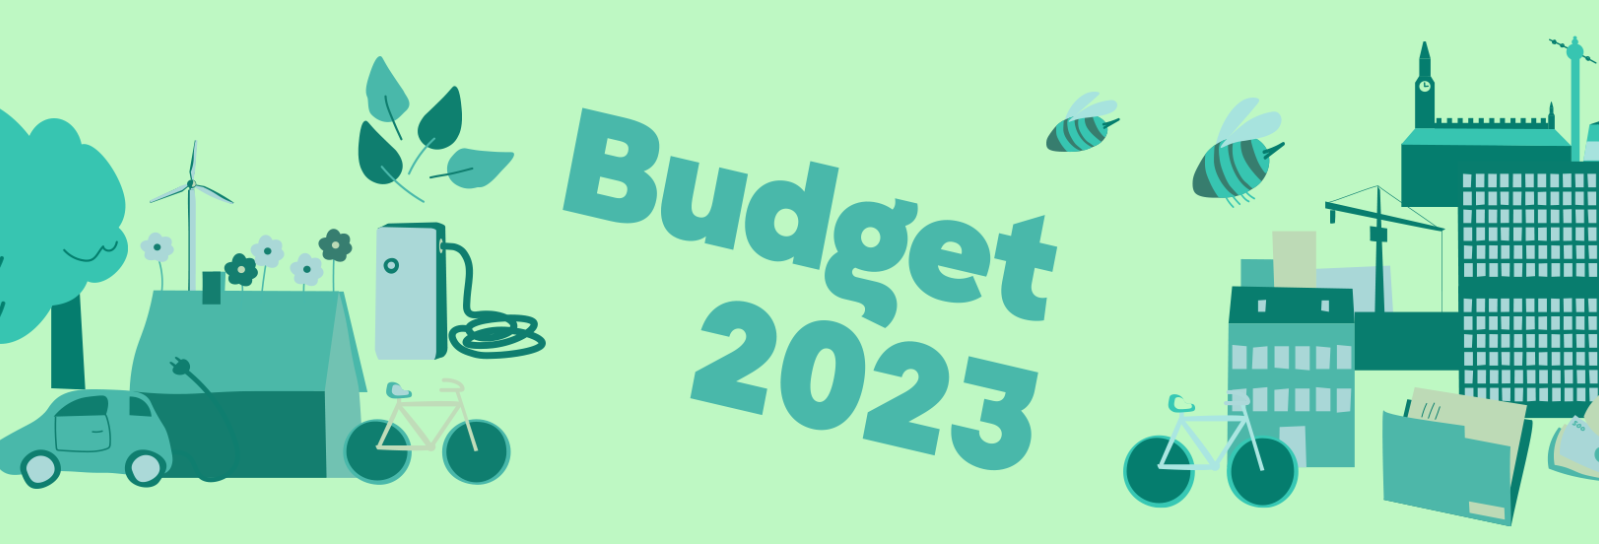 budget 2023 grafik